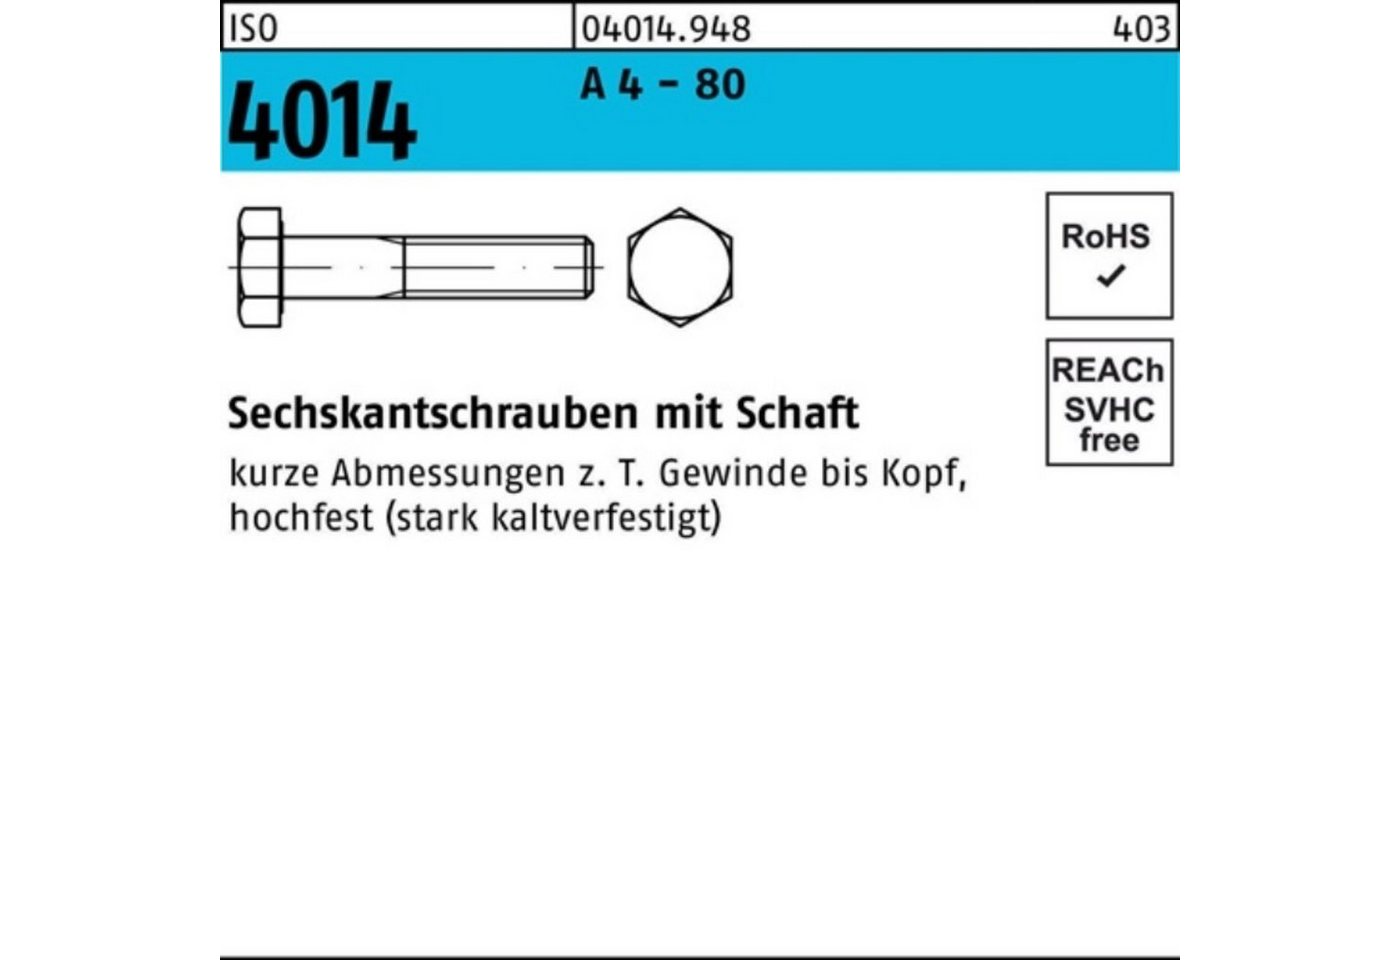 Bufab Sechskantschraube 100er Pack Sechskantschraube ISO 4014 Schaft M8x 35 A 4 - 80 100 Stüc von Bufab